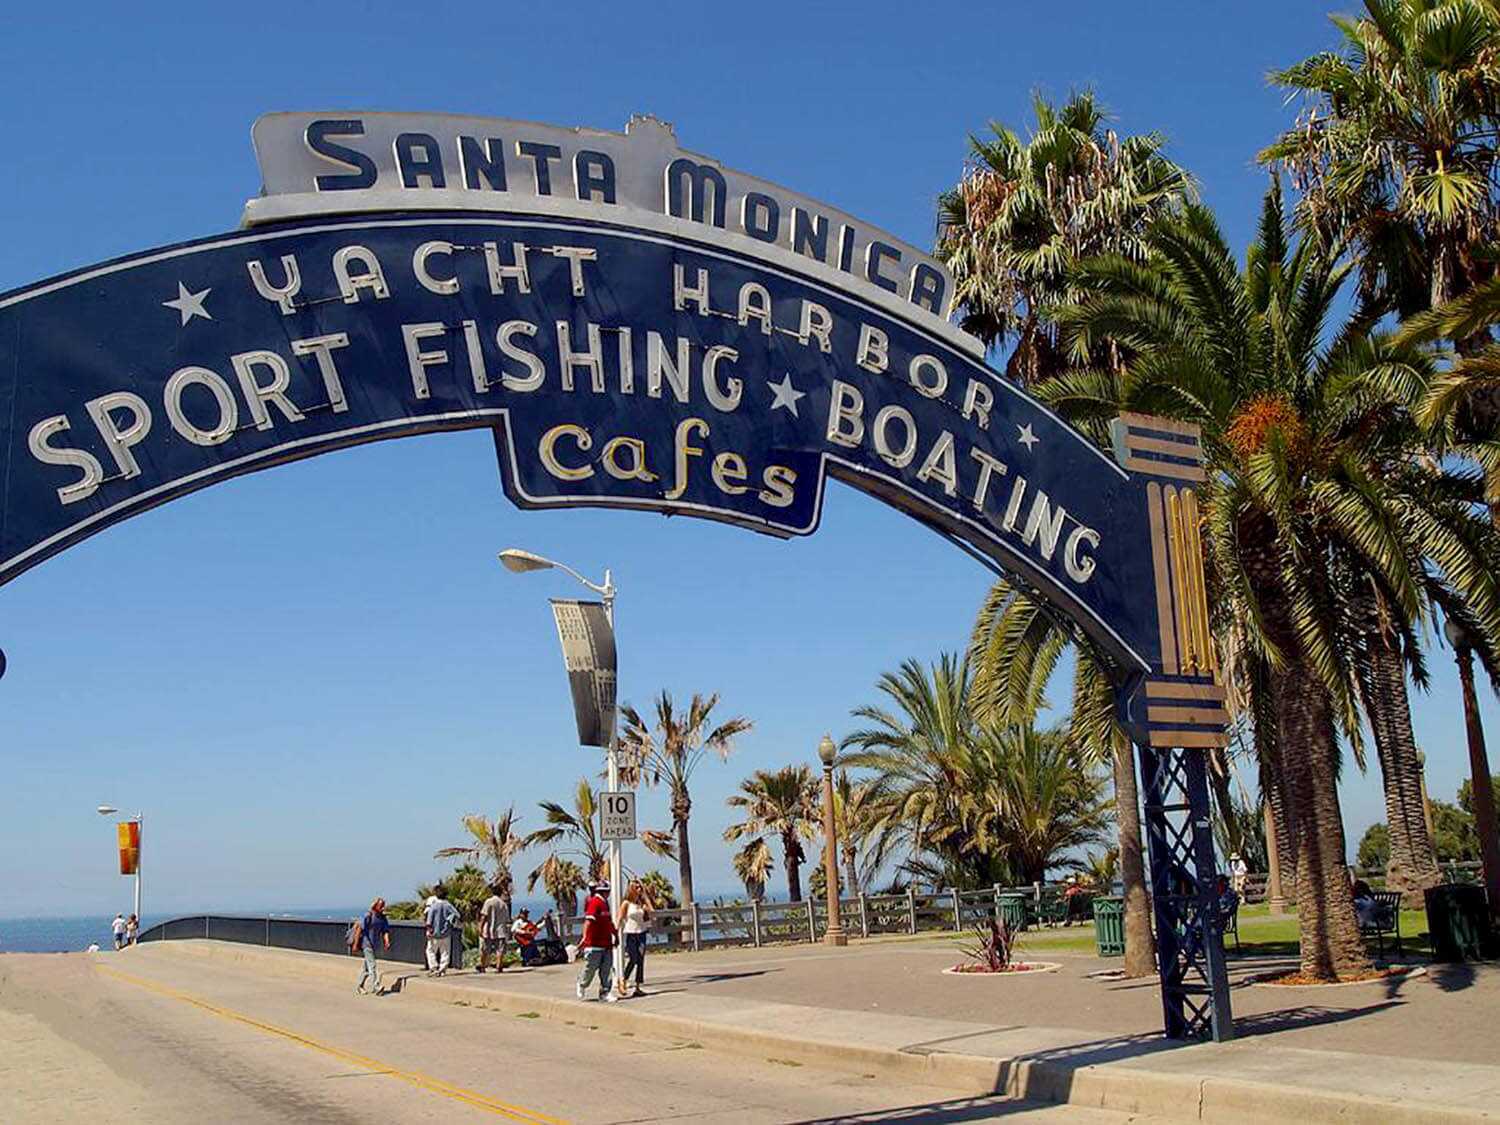 Venice Beach sightseeing tour: Sightseeing